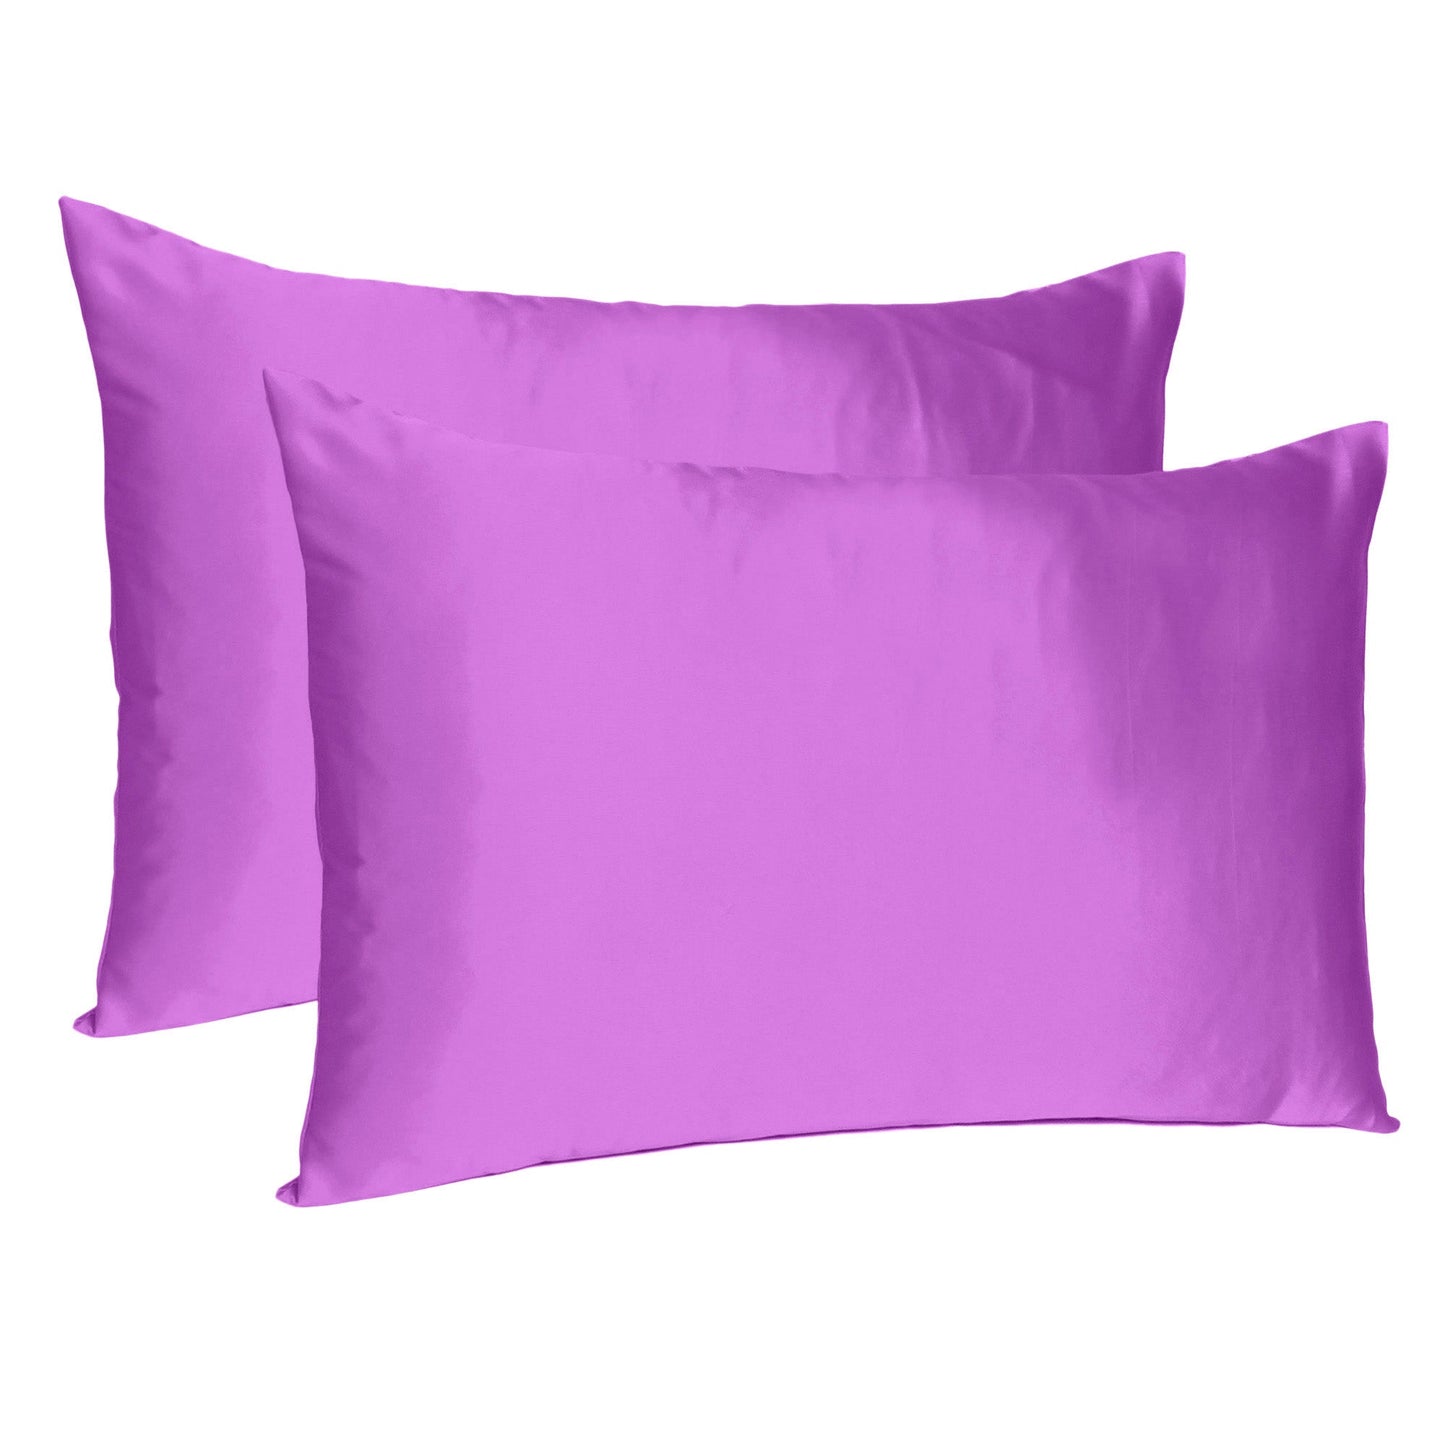 Luxury Soft Plain Satin Silk Pillowcases in Set of 2 - Vivid Viola